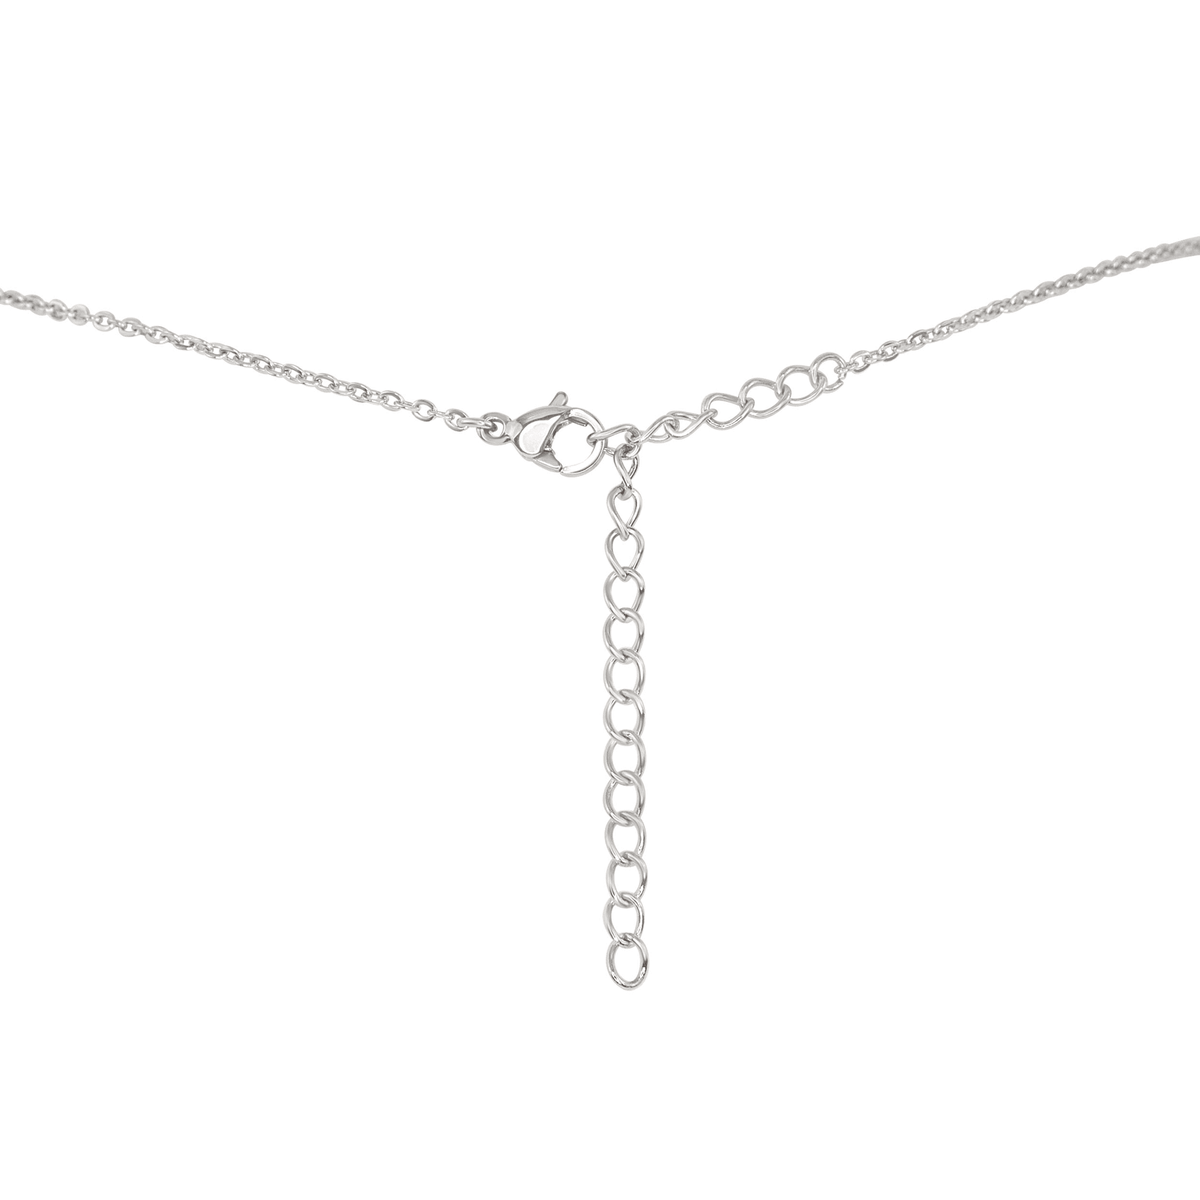 Emerald Gemstone Chain Layered Choker Necklace